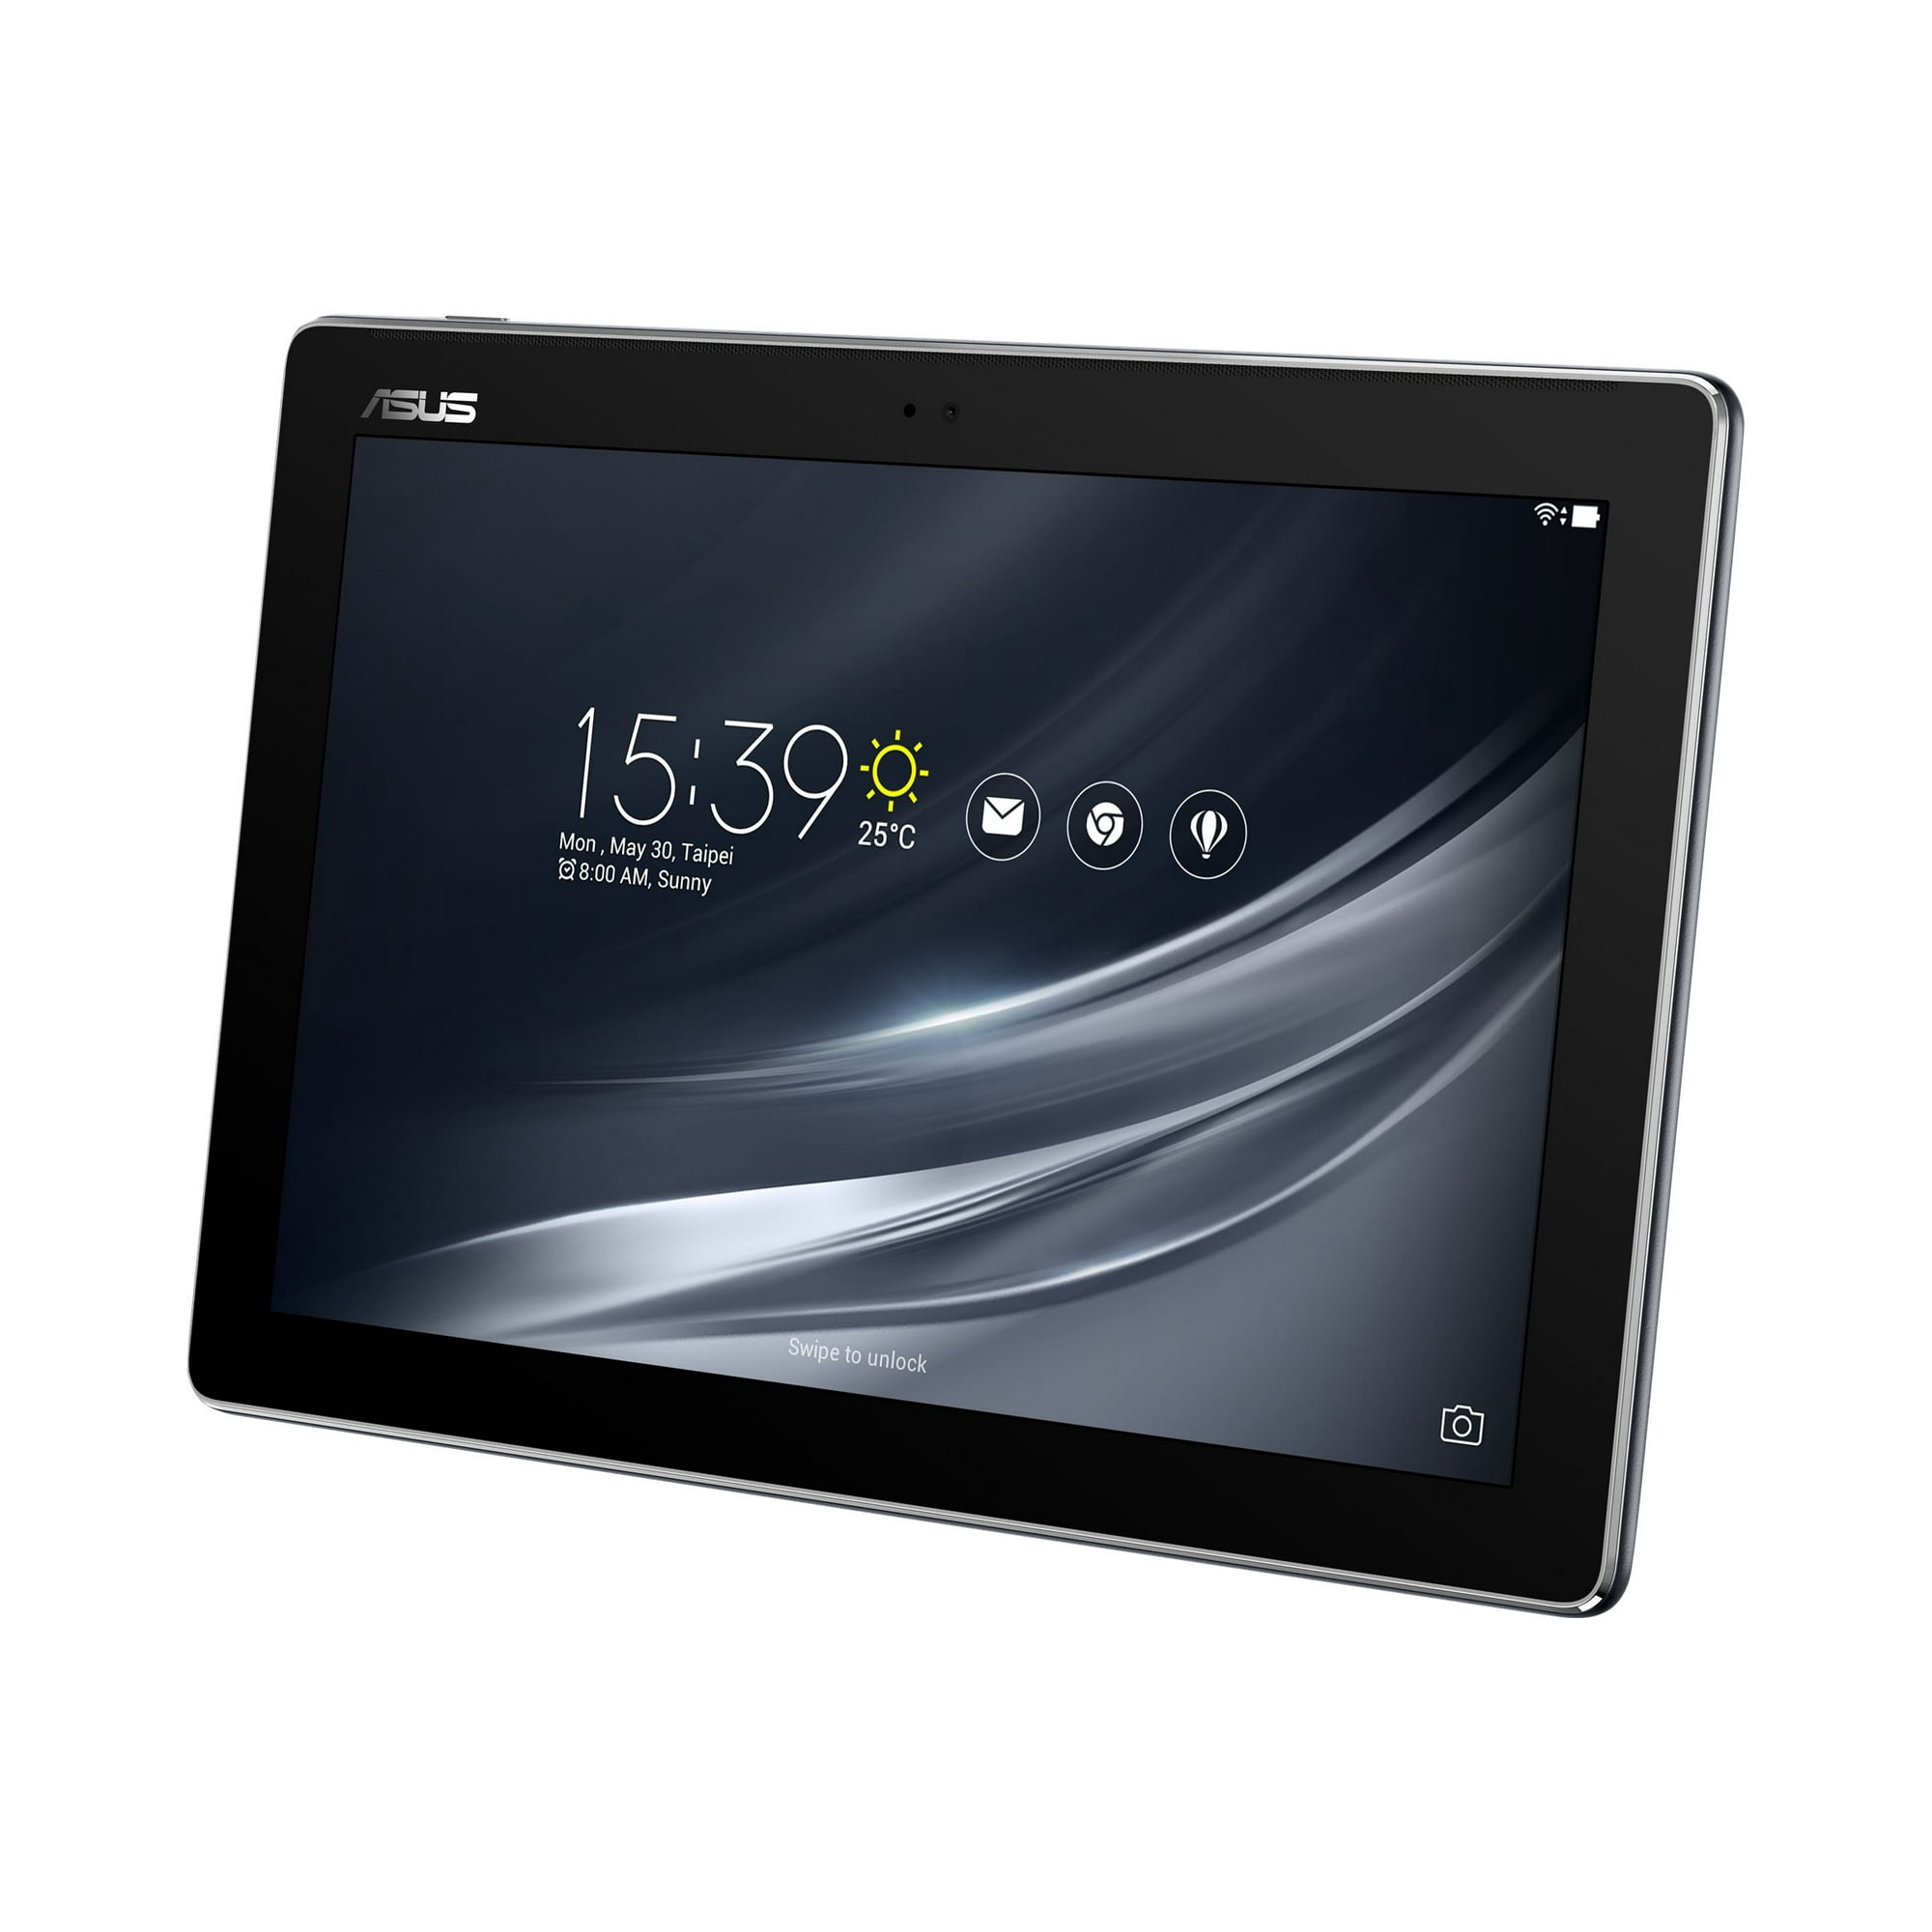 ASUS ZenPad 10 Z301M - Tablet - Android 7.0 (Nougat) - 16 GB eMMC ...